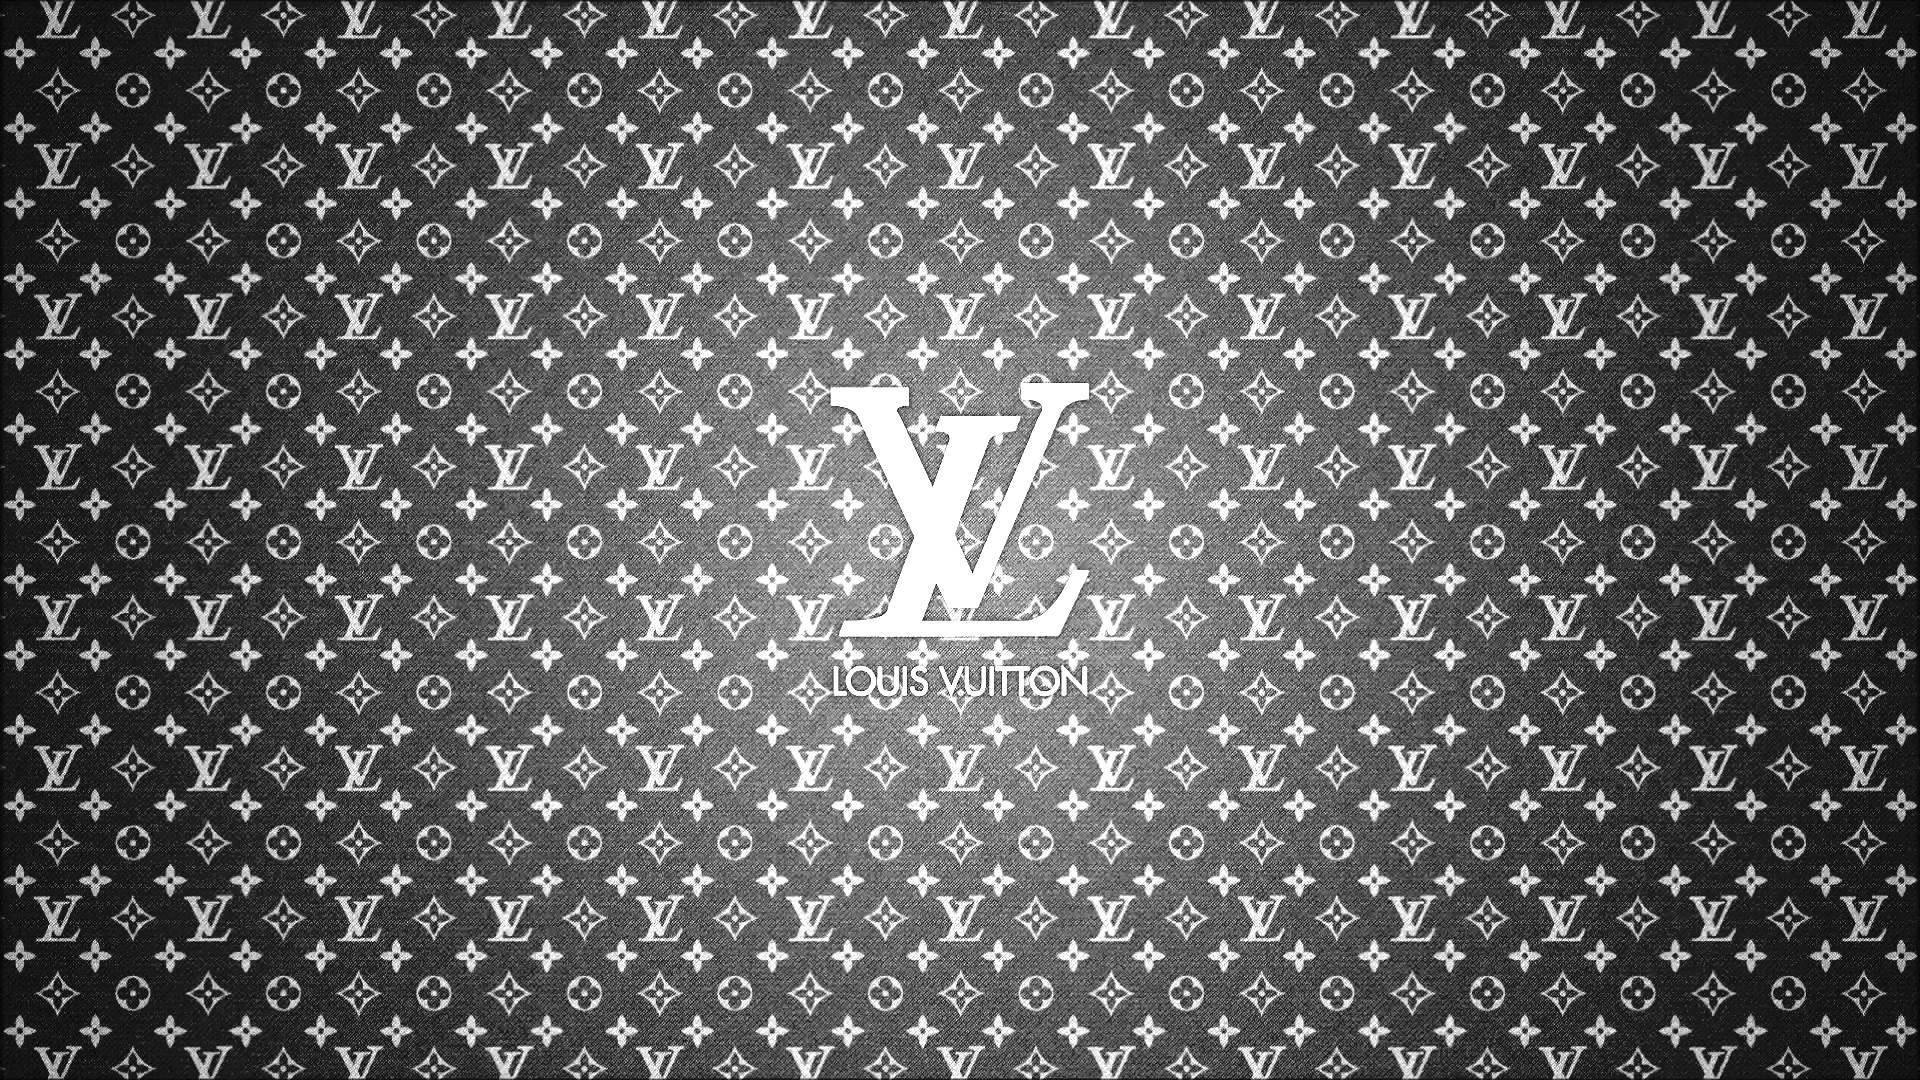 Louis Vuitton Wallpaper Image Photos Pictures Background